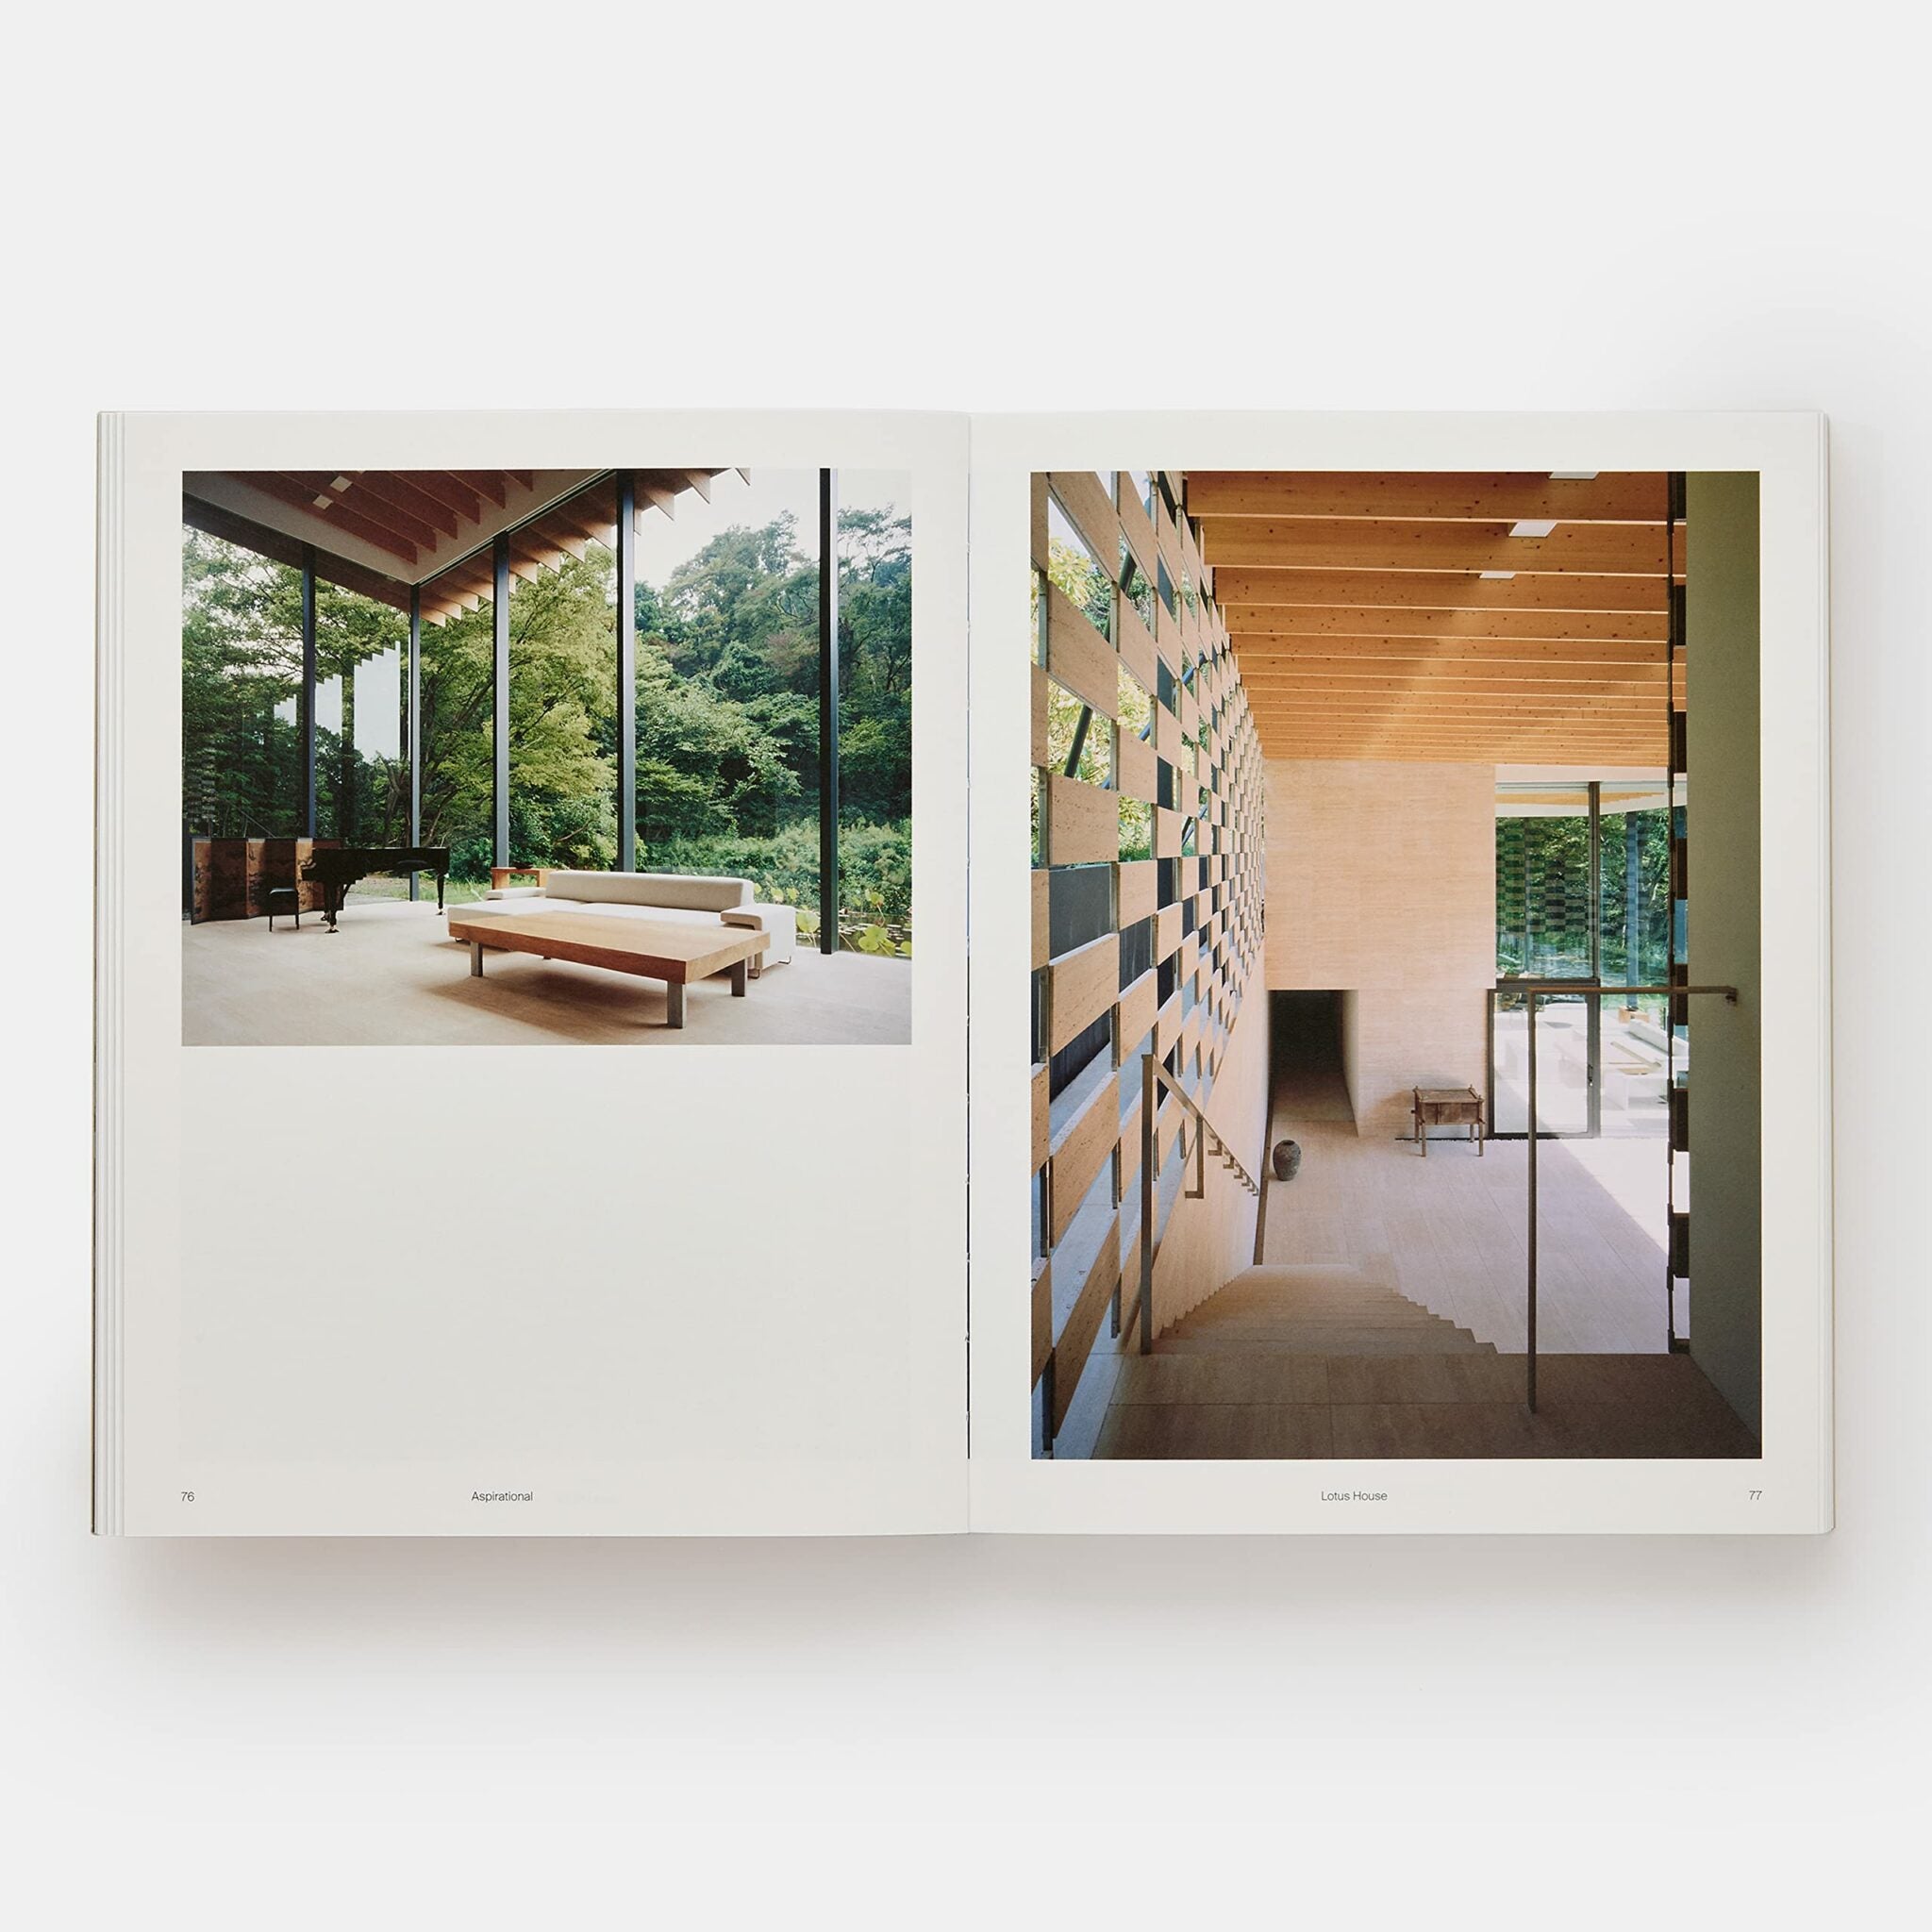 Hintsdeco Books Βιβλίο Τέχνης Βιβλίο Τέχνης Japanese Interiors Υπόλευκο/Μπεζ 21×2,9×27 cm Hintsdeco